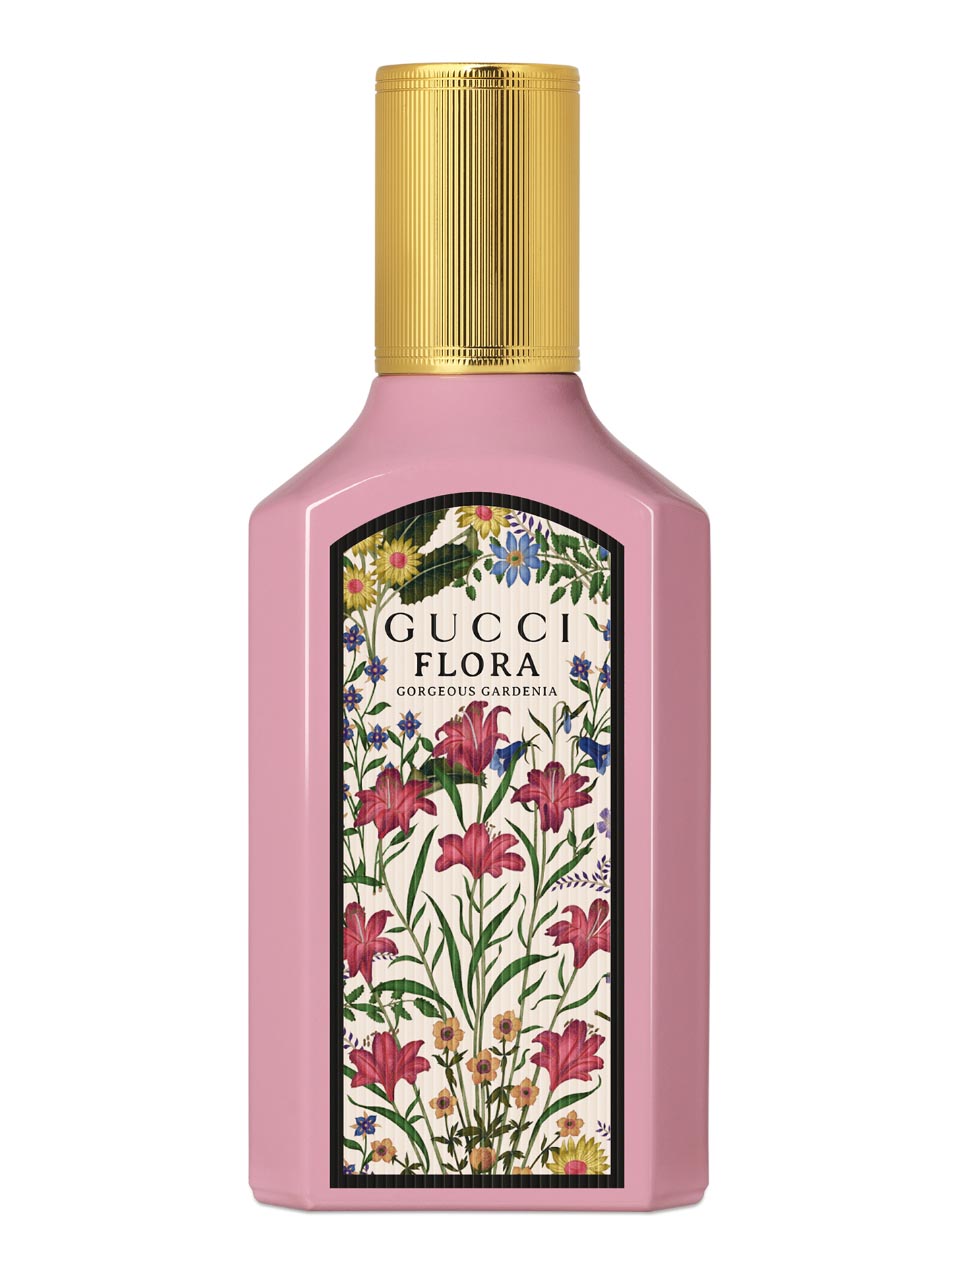 Gucci Flora Gorgeous Gardenia Eau de Parfum 50 ml null - onesize - 1